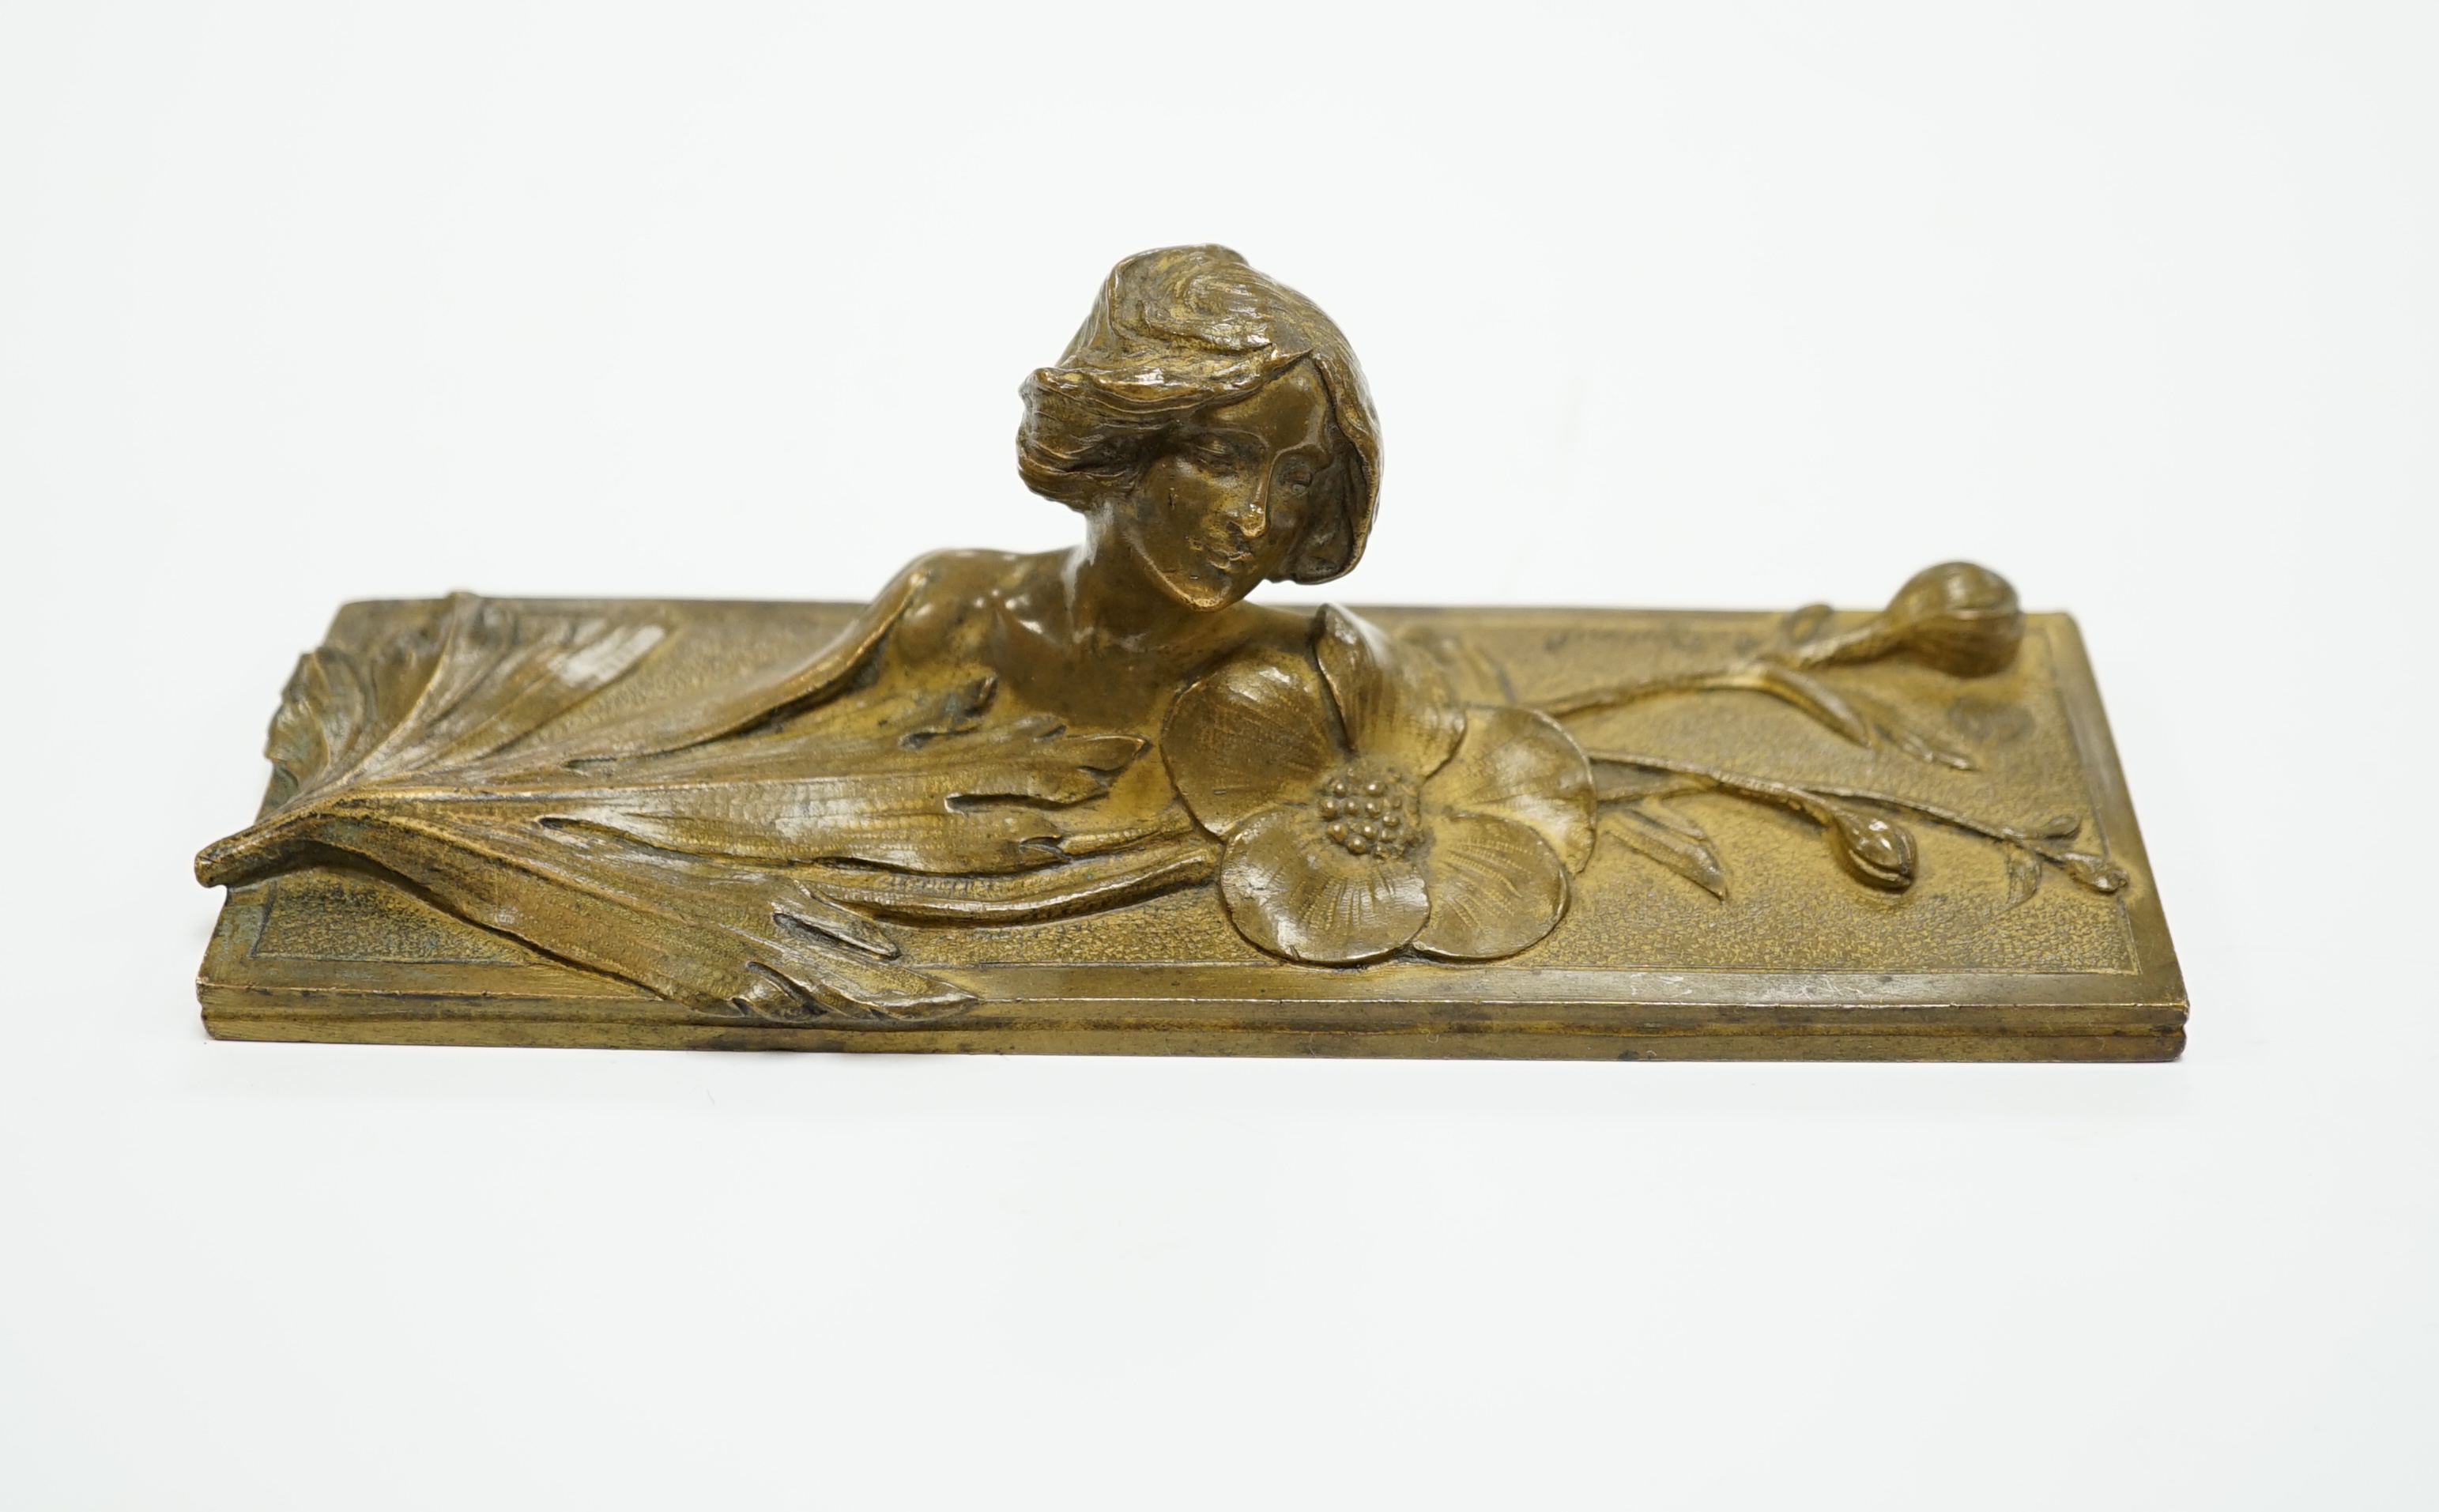 An Art Nouveau, Maurice Bouval bronze paperweight, 16.5cm wide